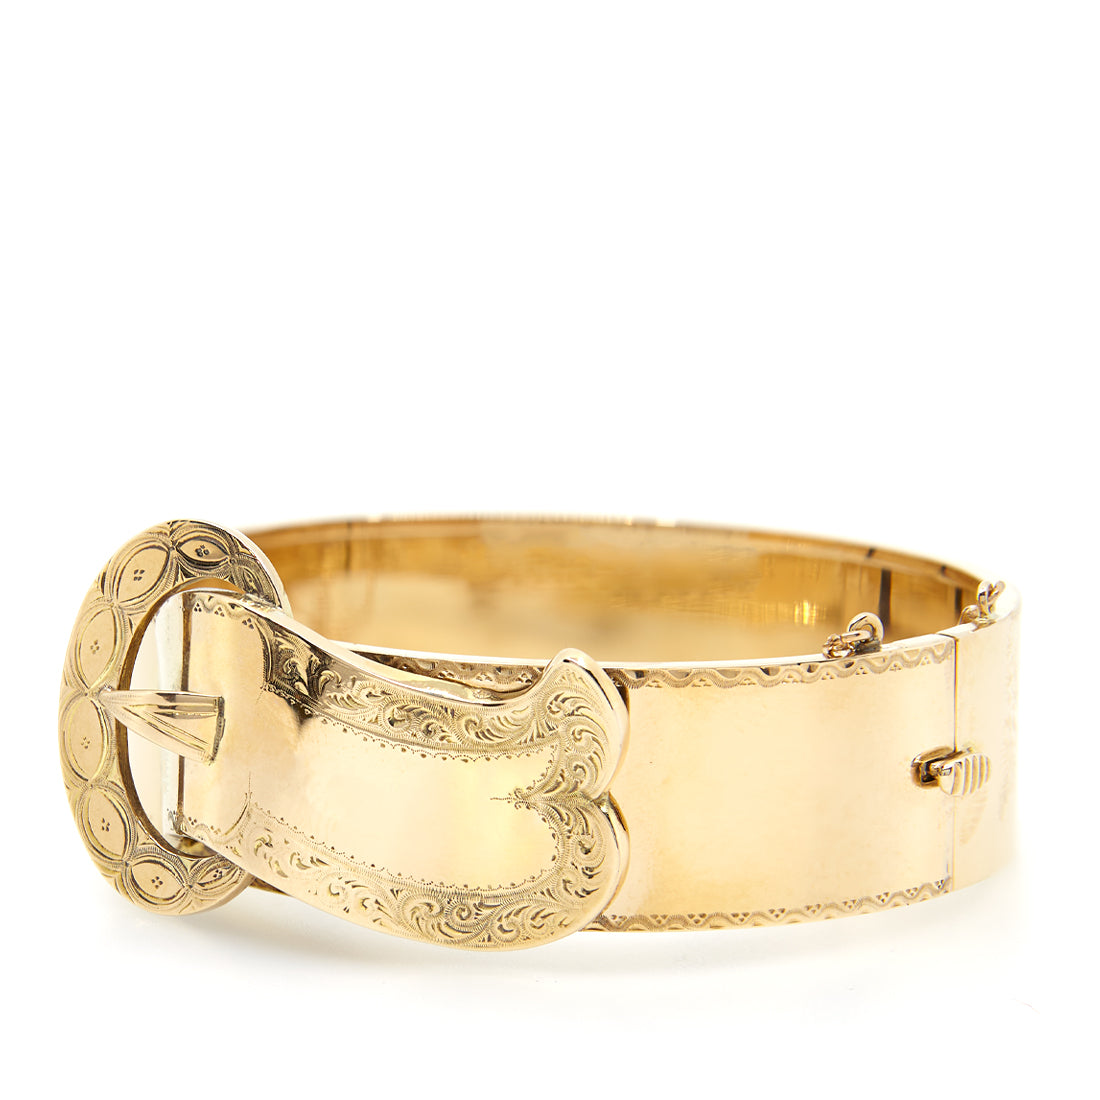 Antique gold bracelet with clasp